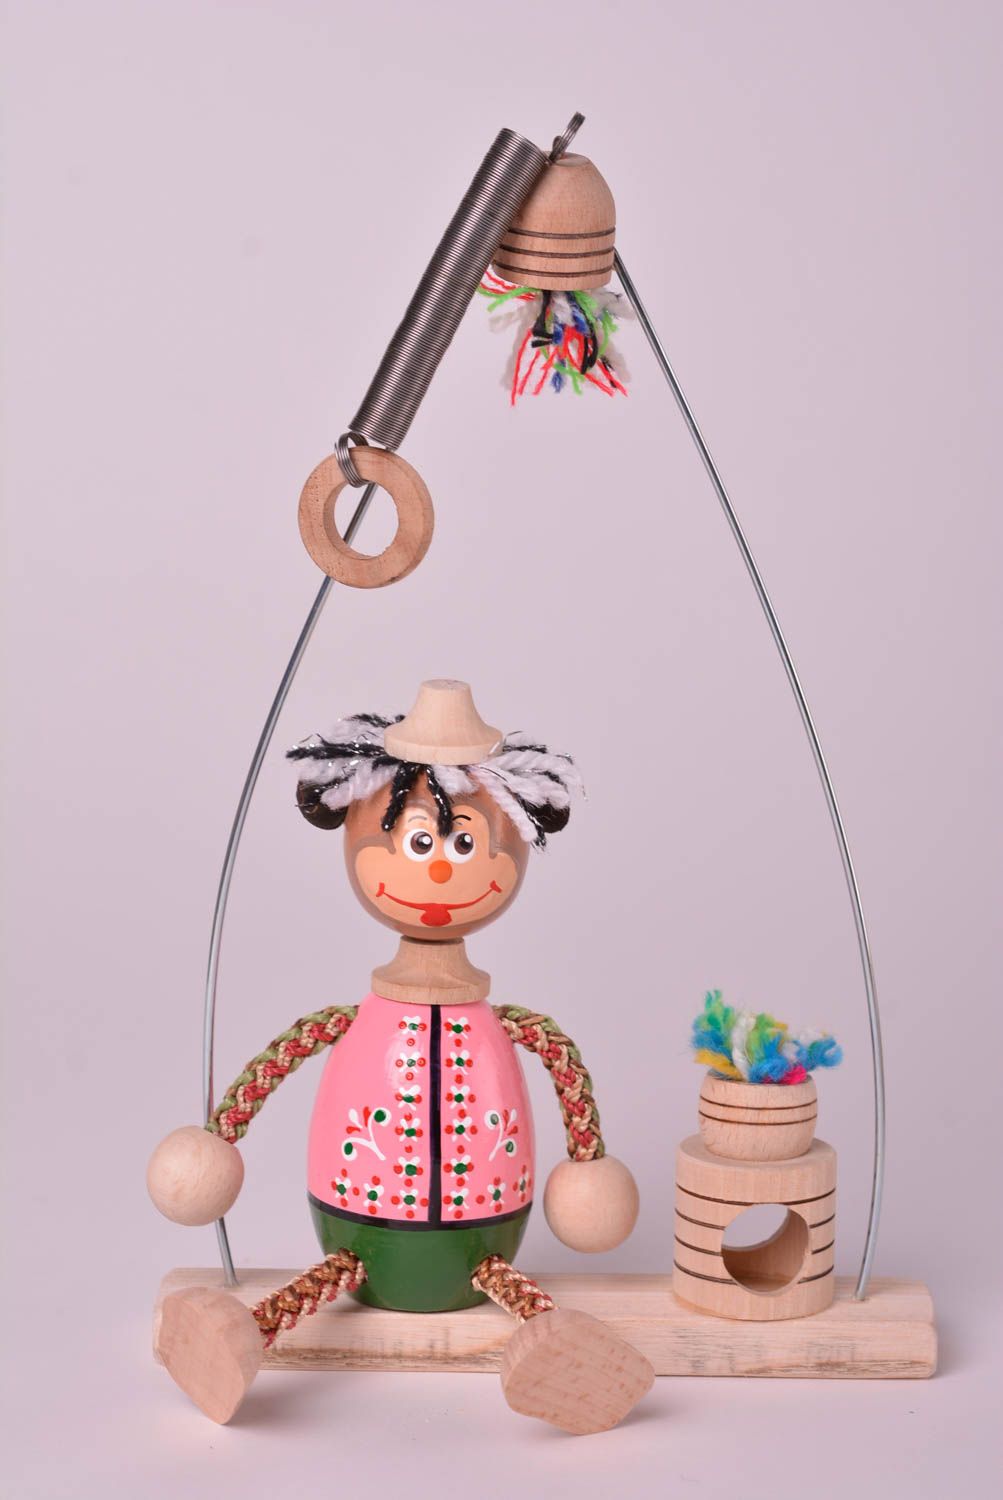 Handmade designer wooden toy unusual toy for kids beautiful nursery decor photo 1